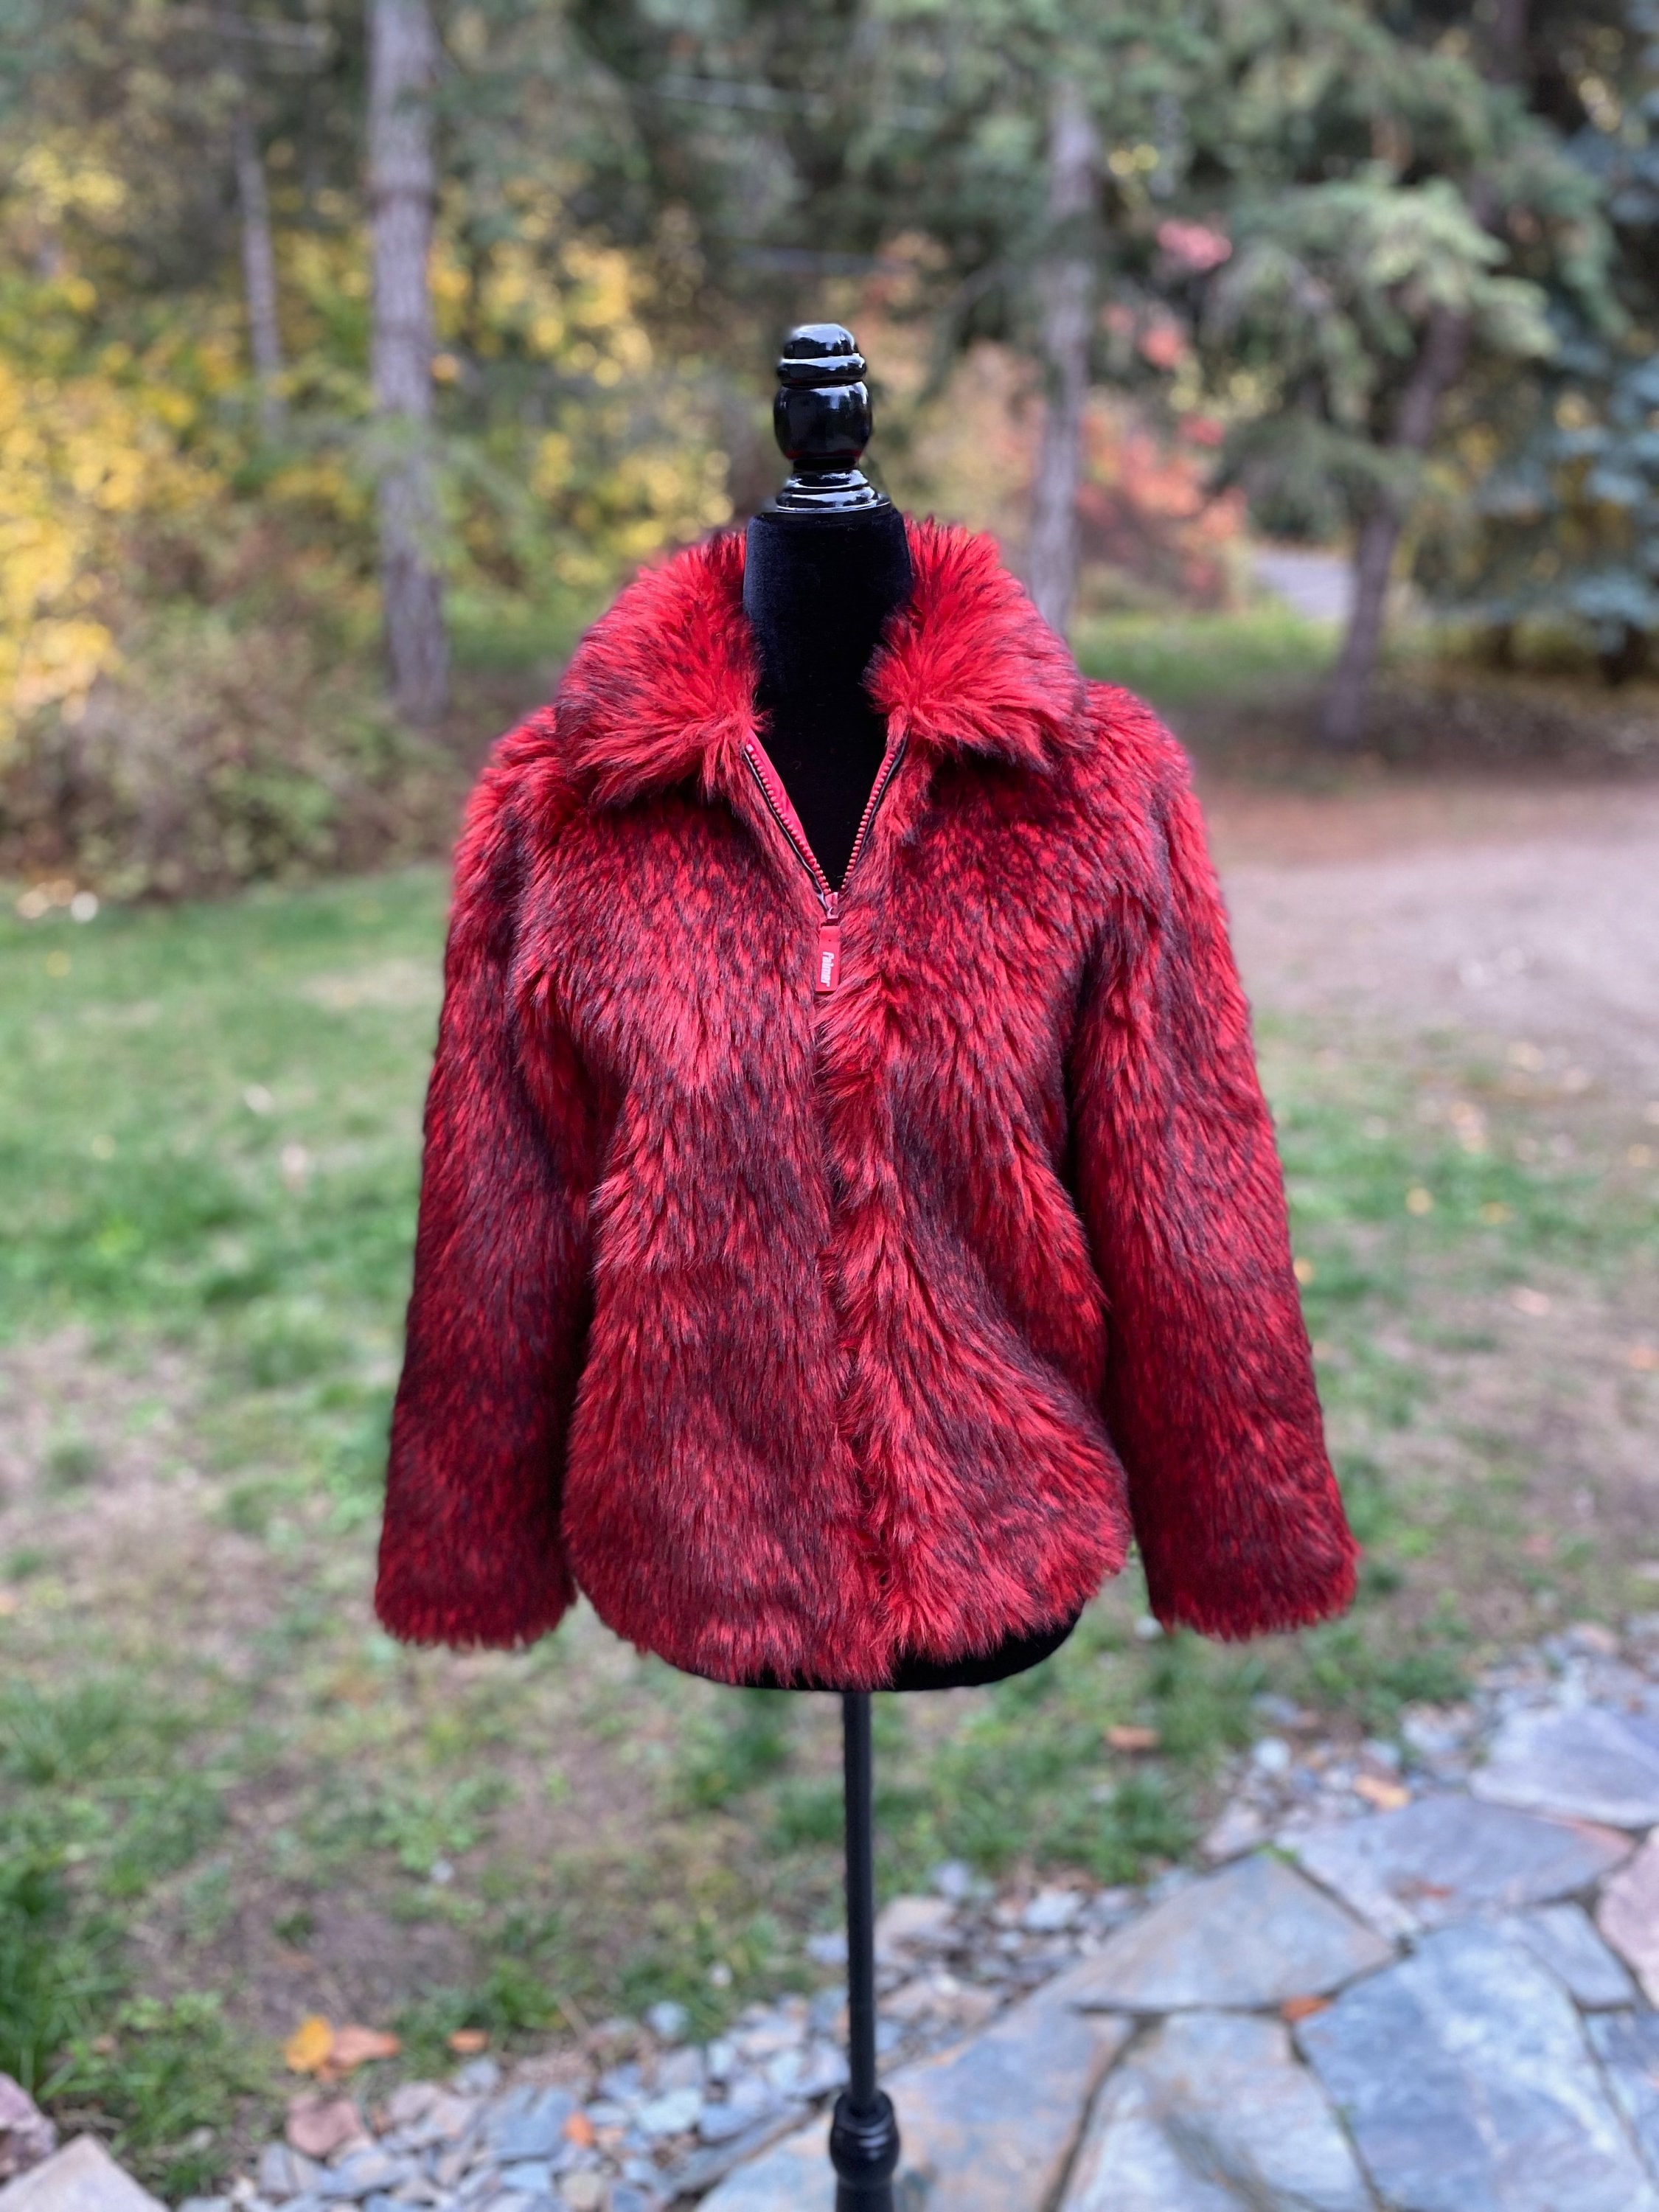 Patterned red faux fur coat